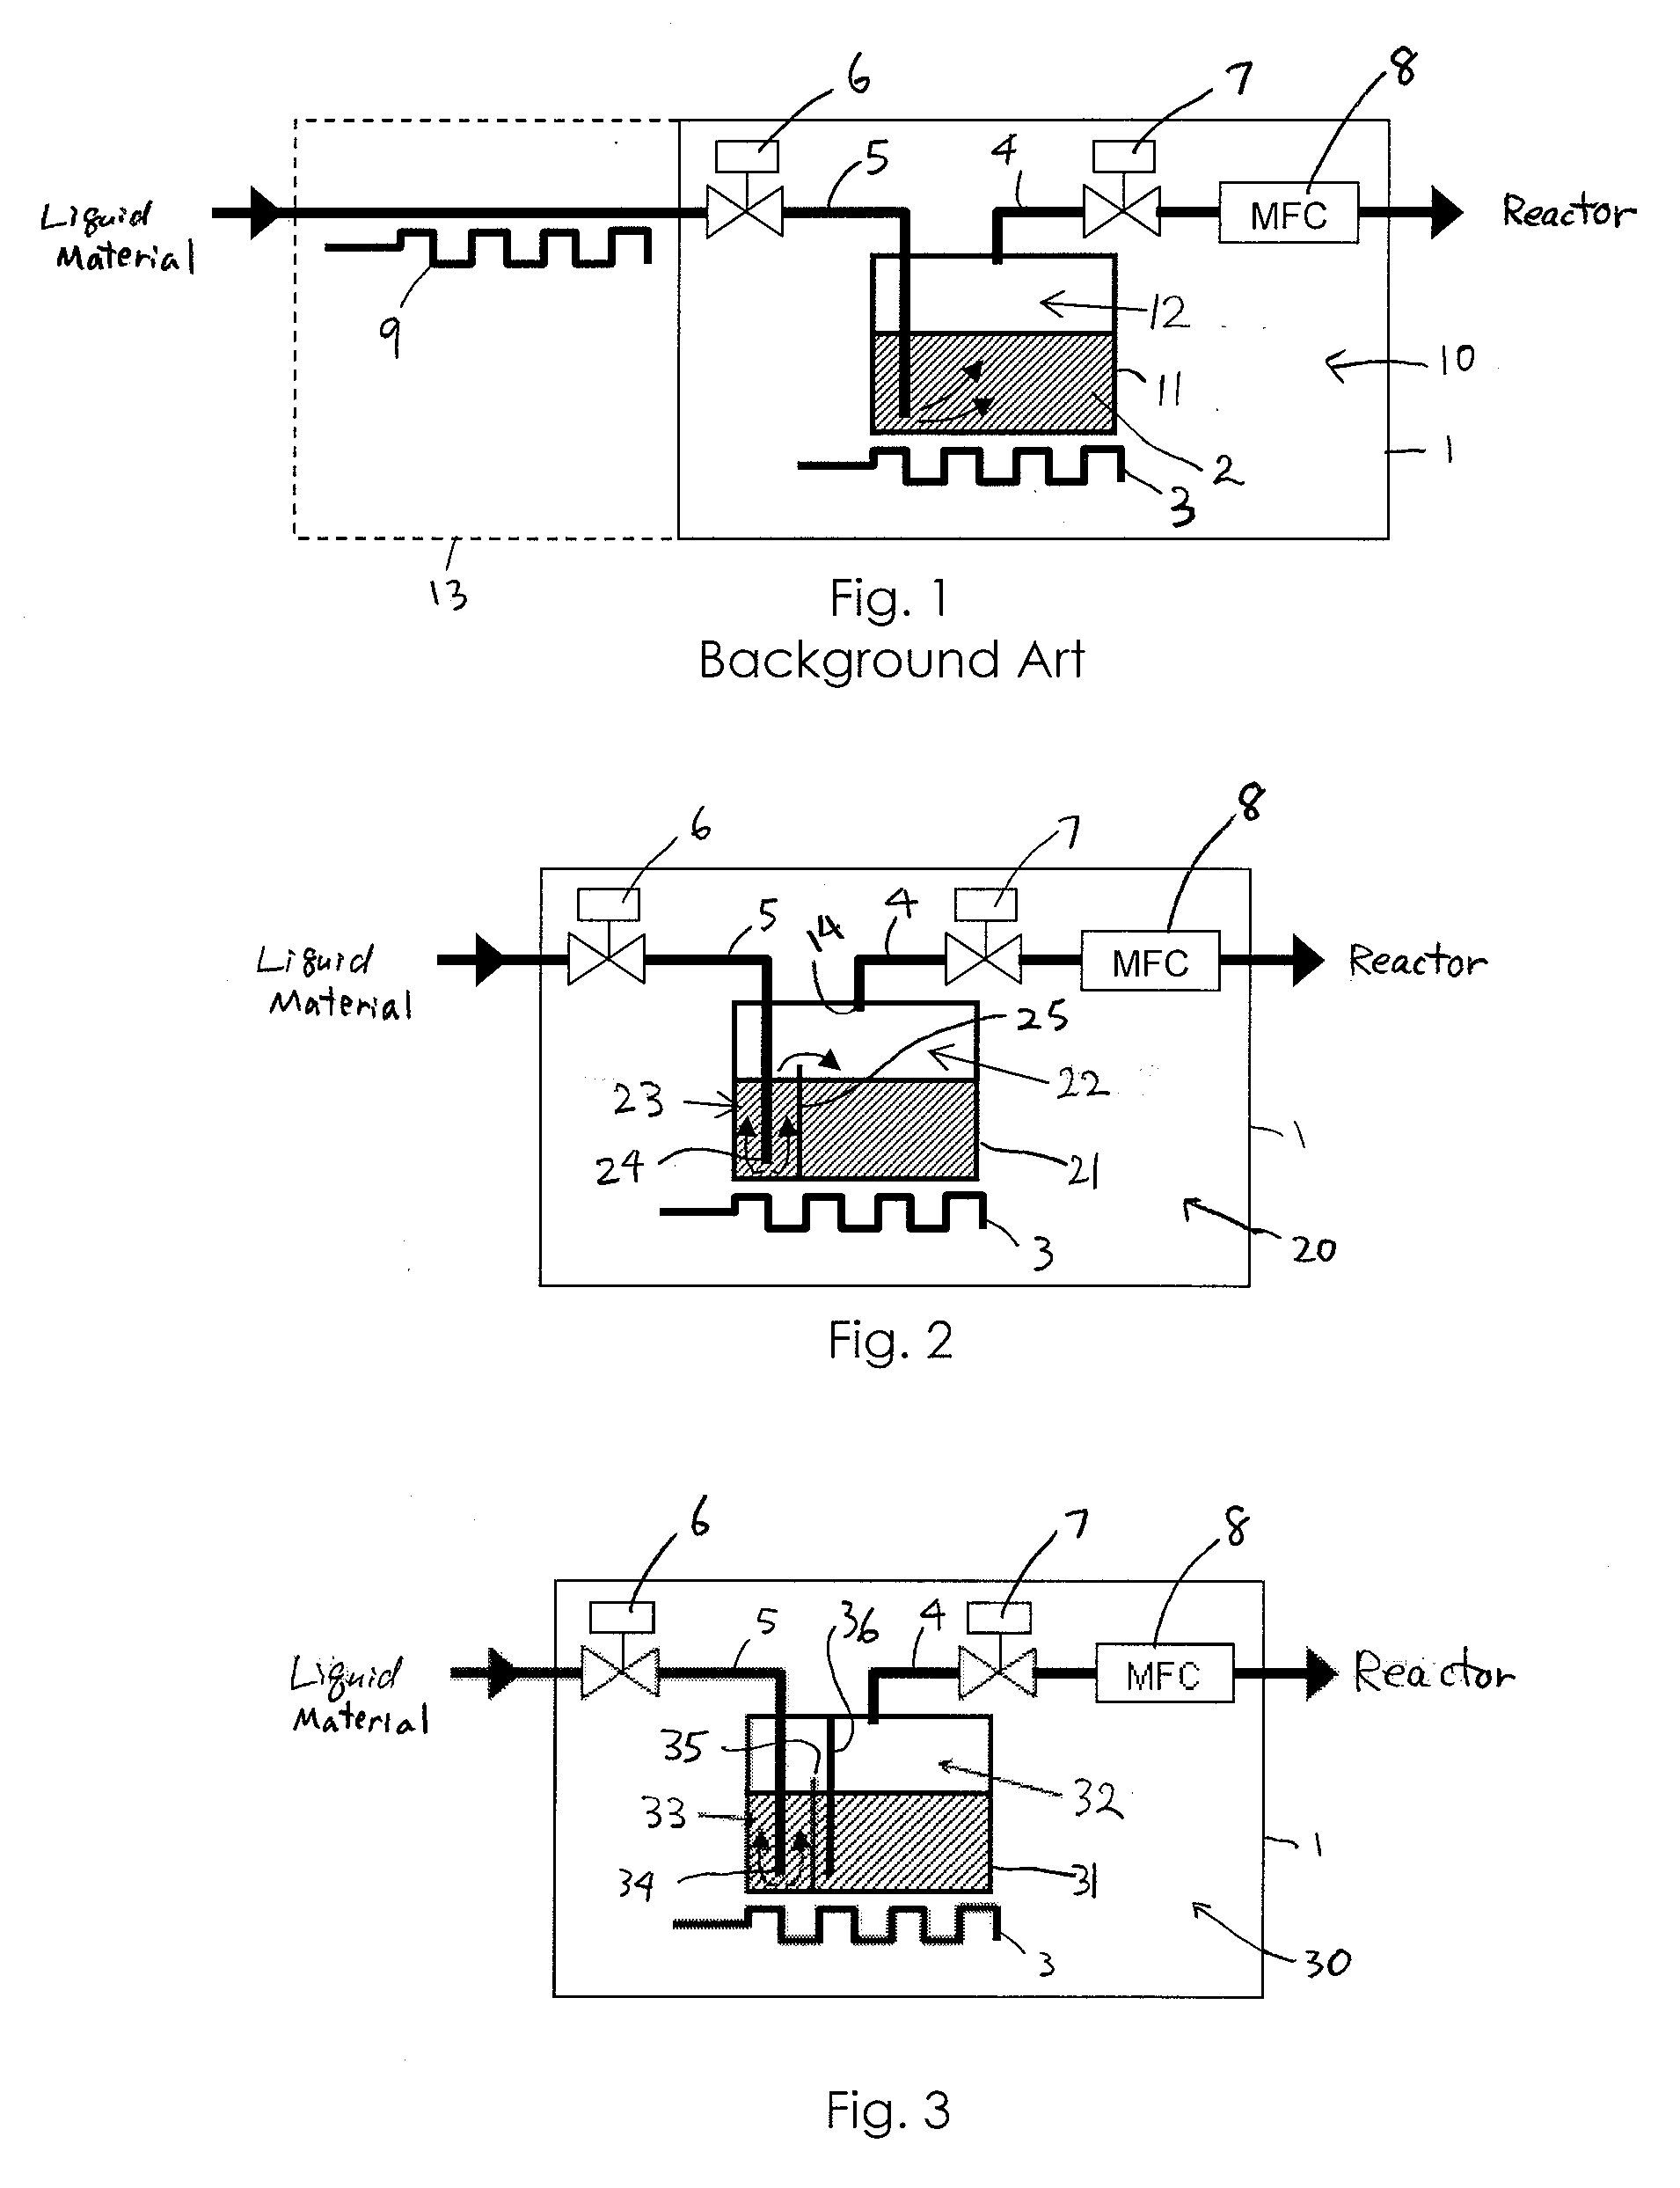 Liquid material vaporization apparatus for semiconductor processing apparatus